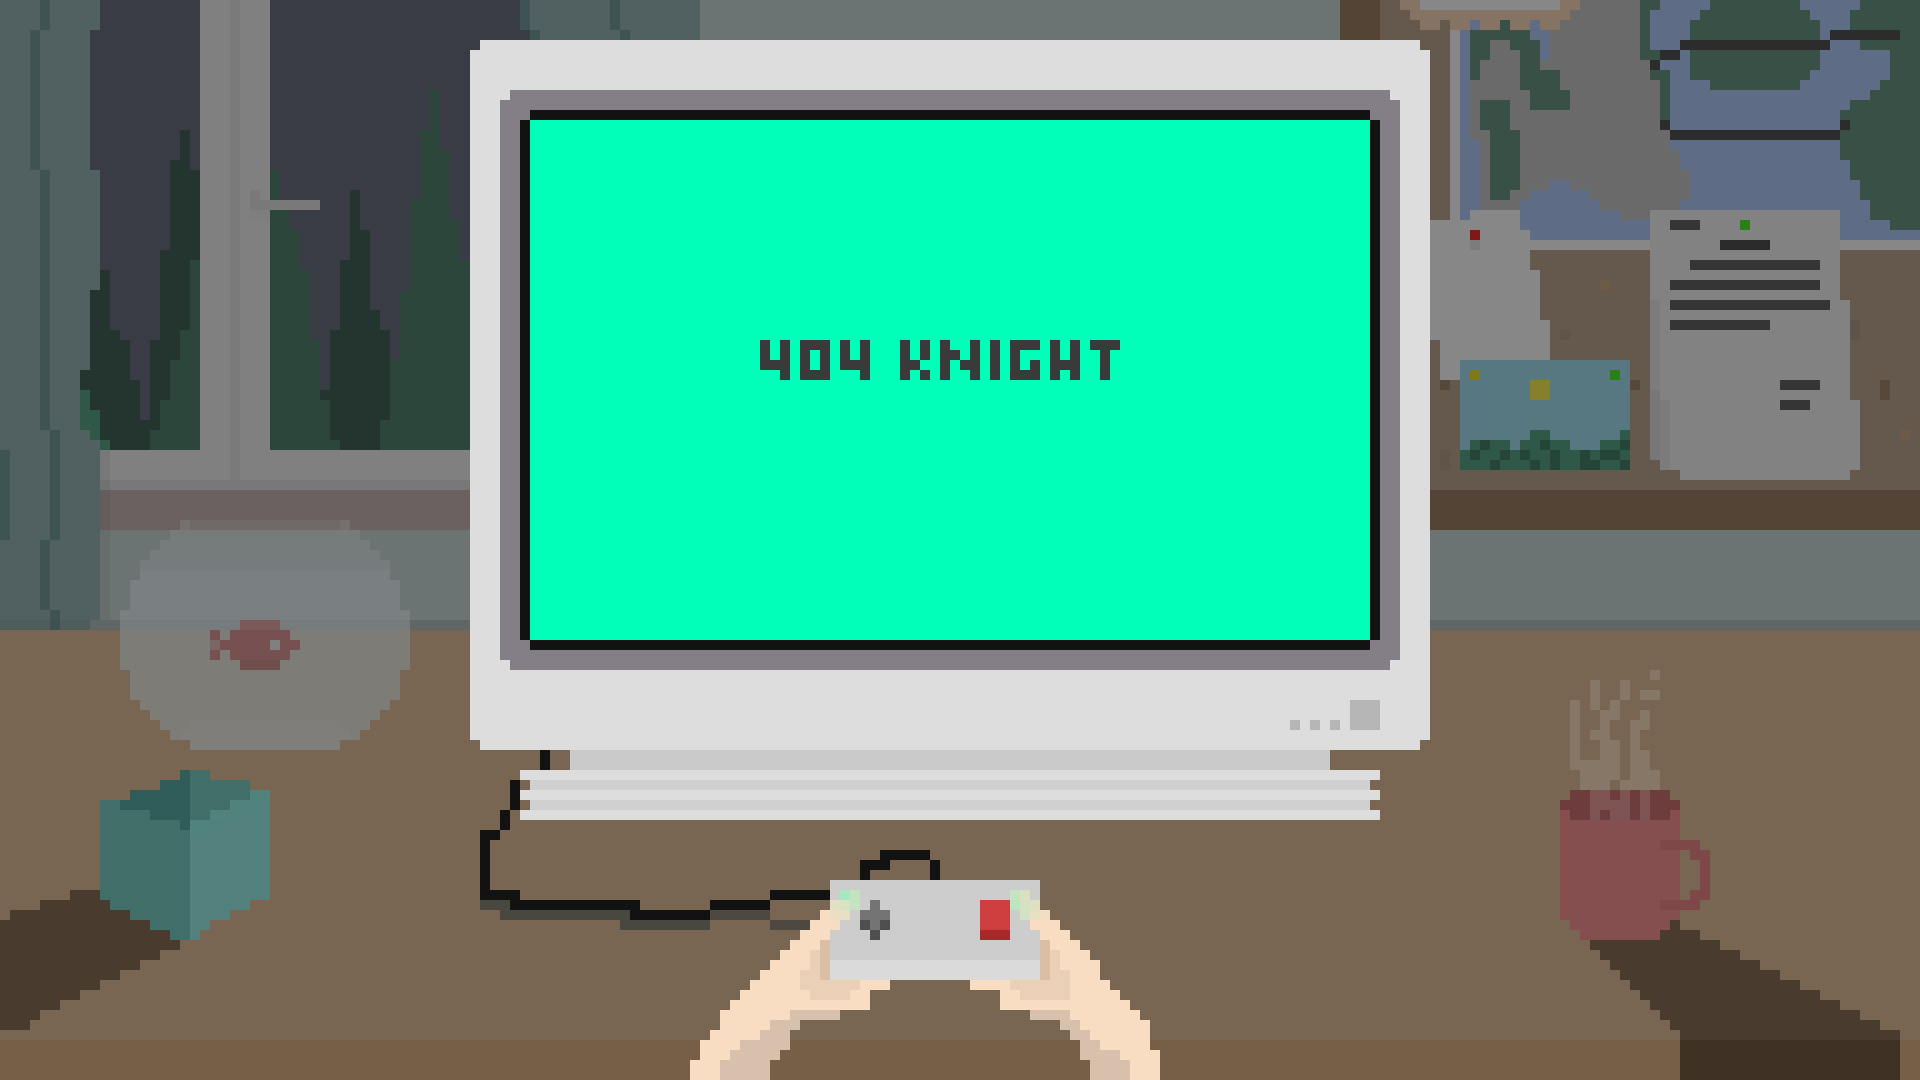 404 Knight